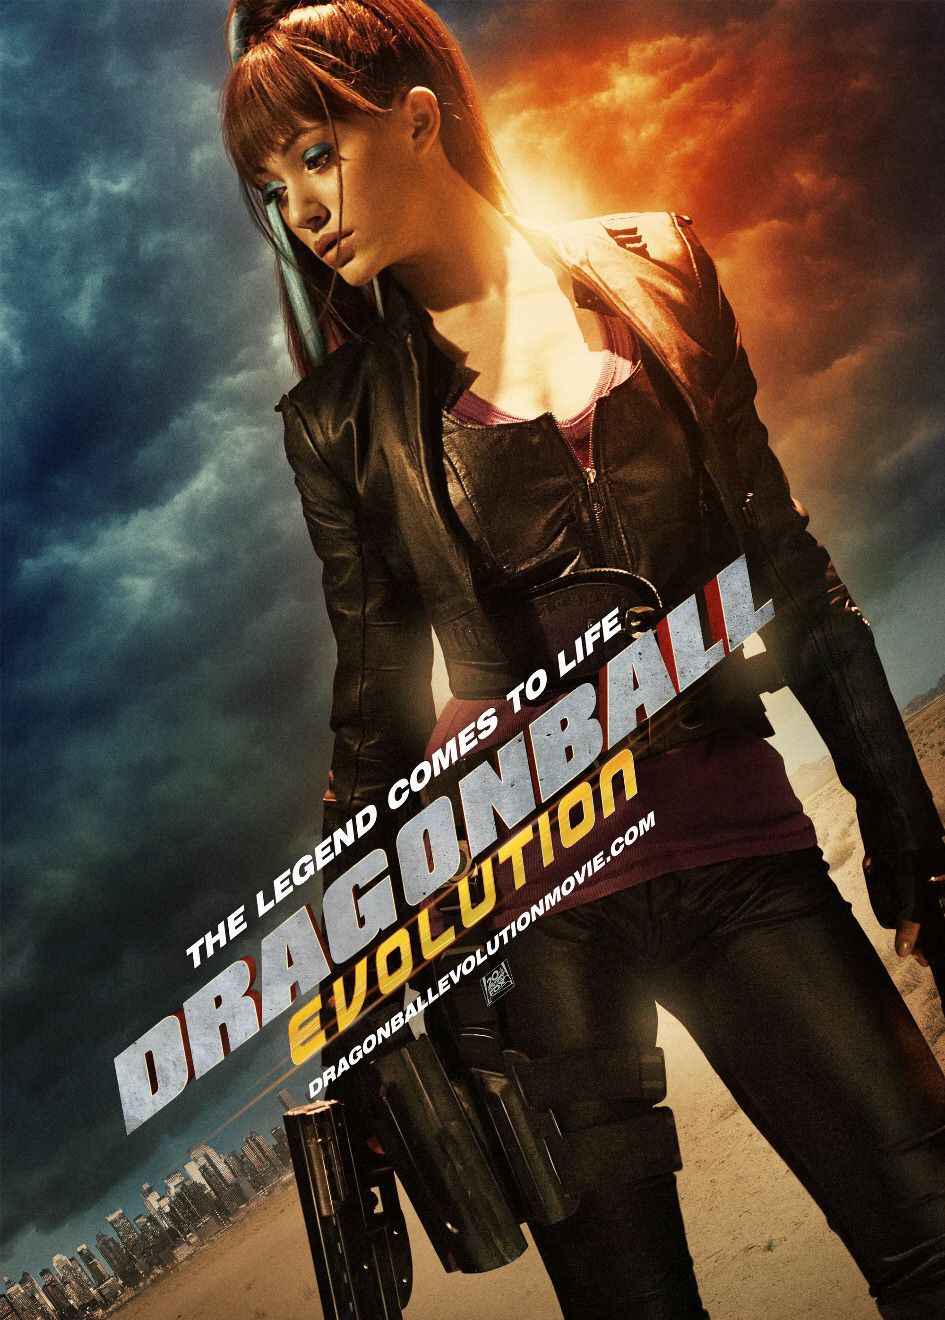 Dragonball Evolution 2